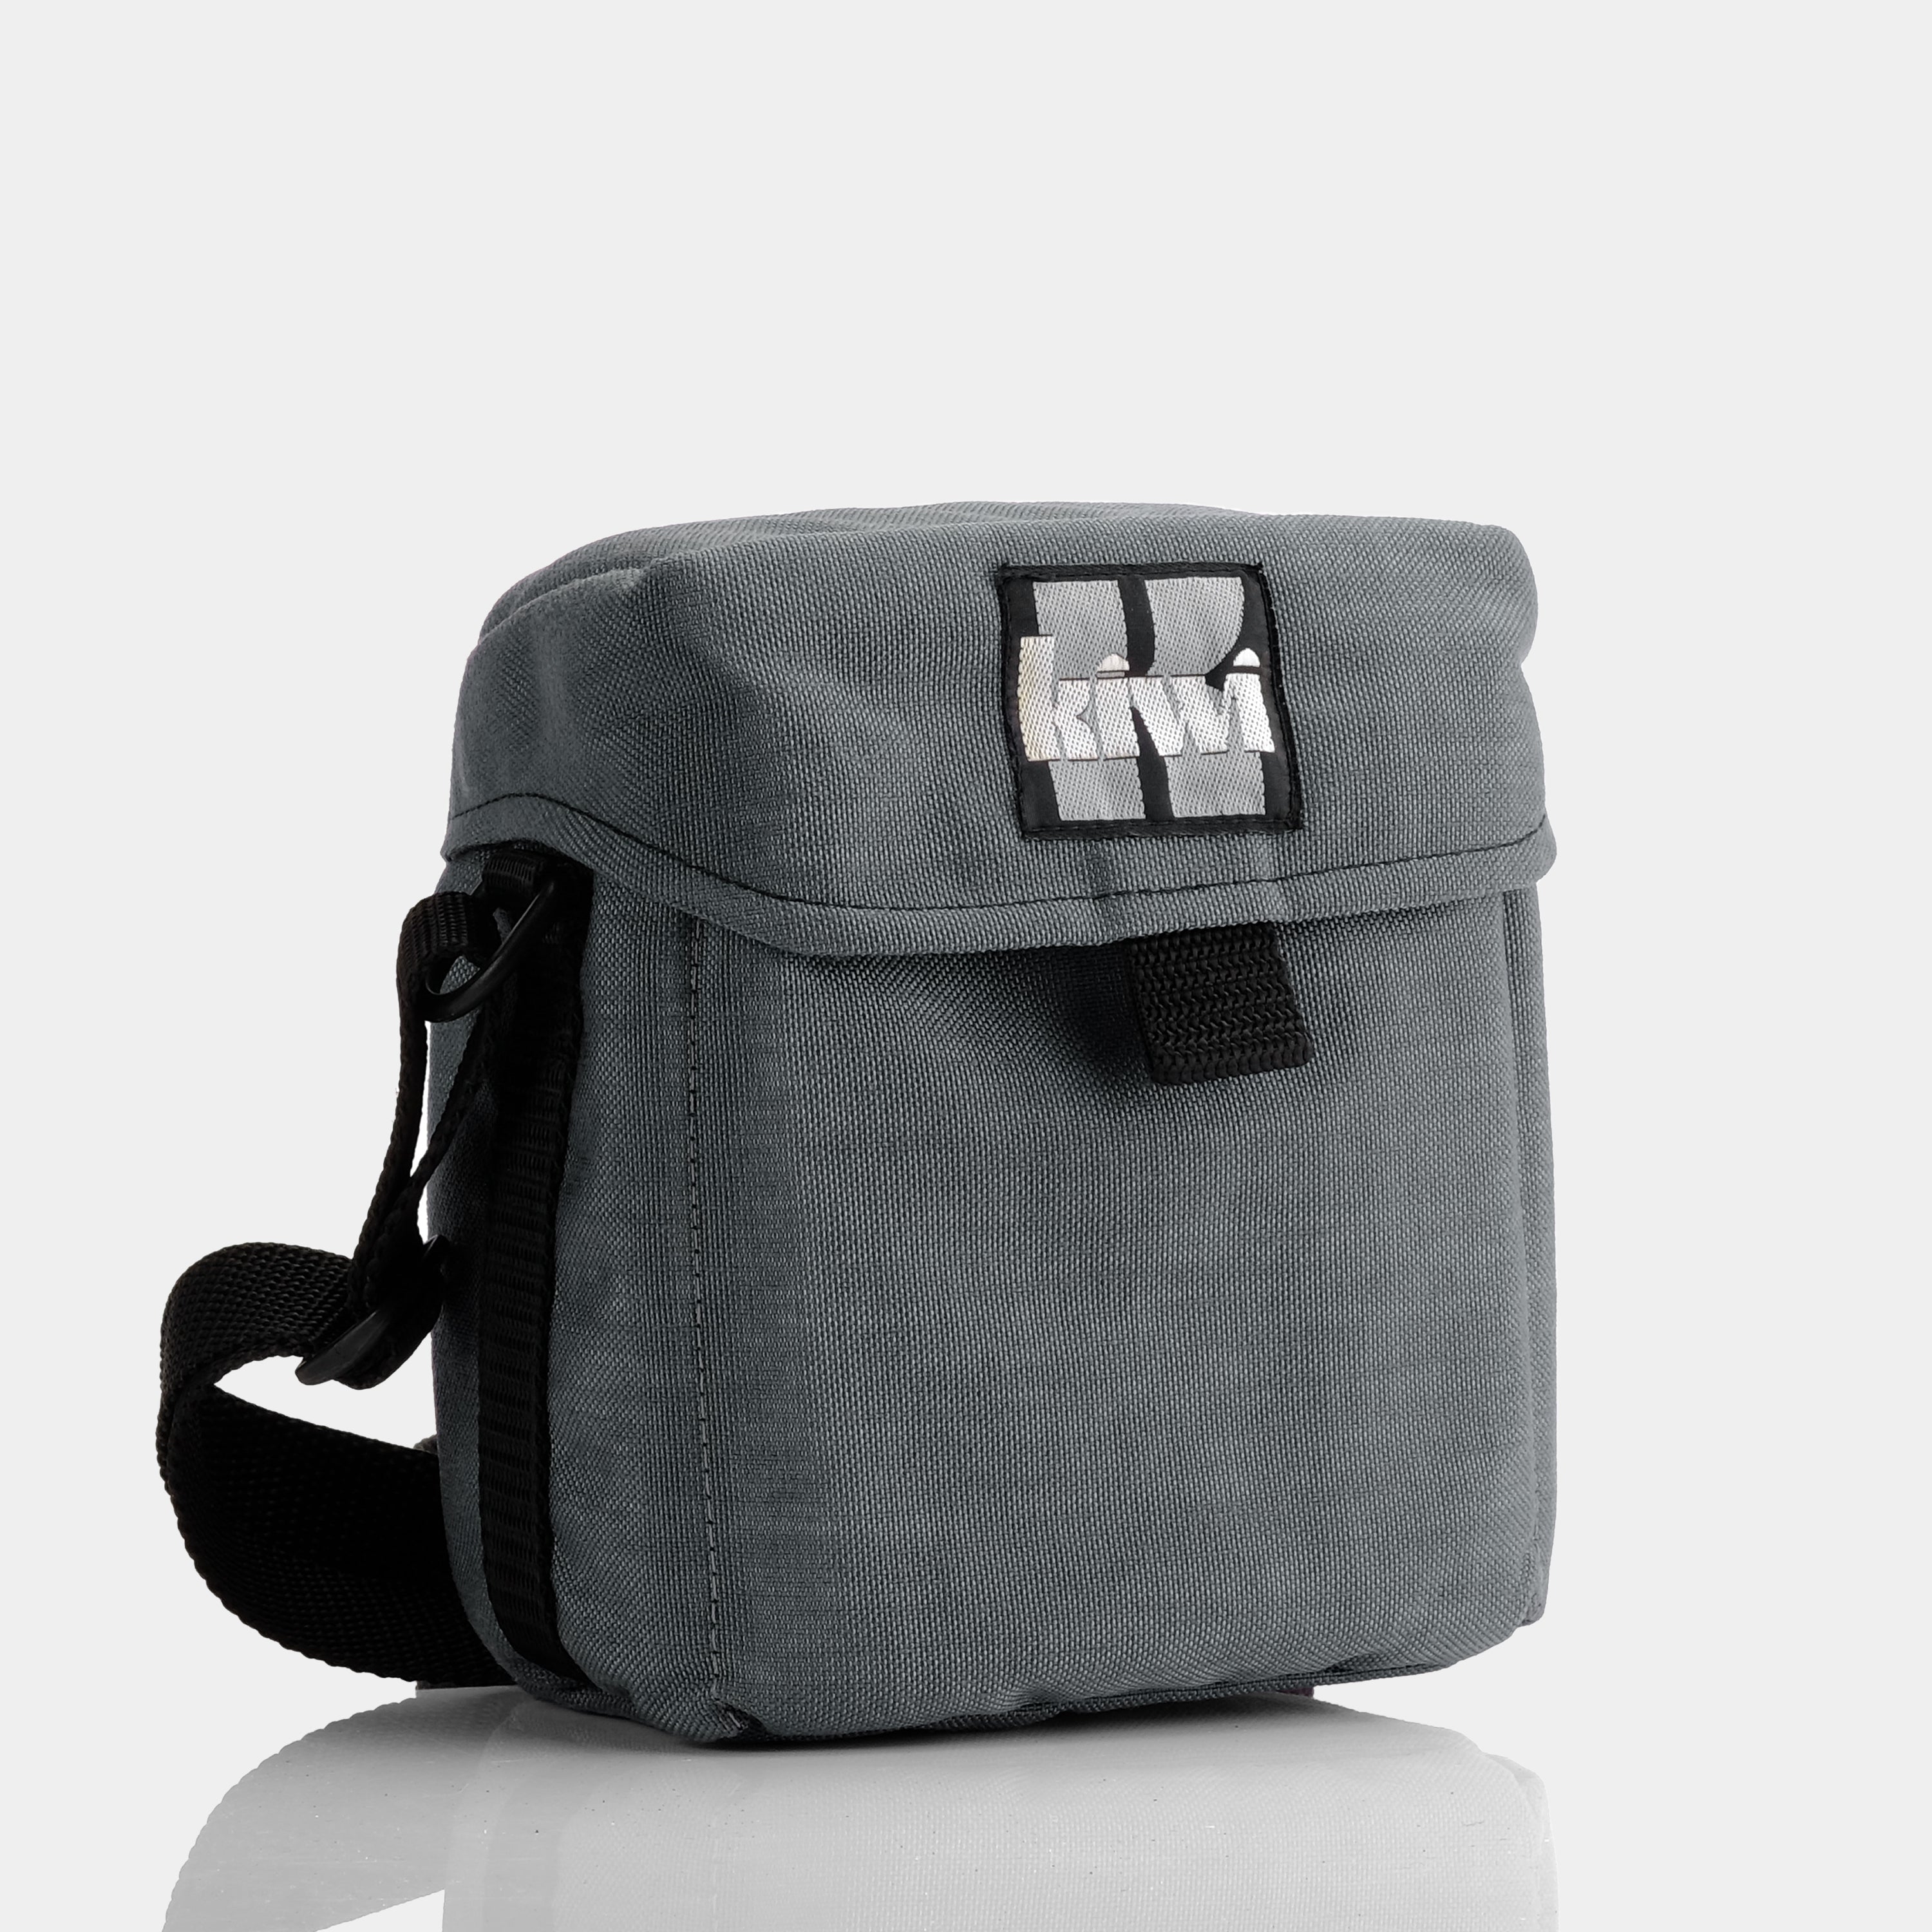 Kiwi Grey Camera Bag